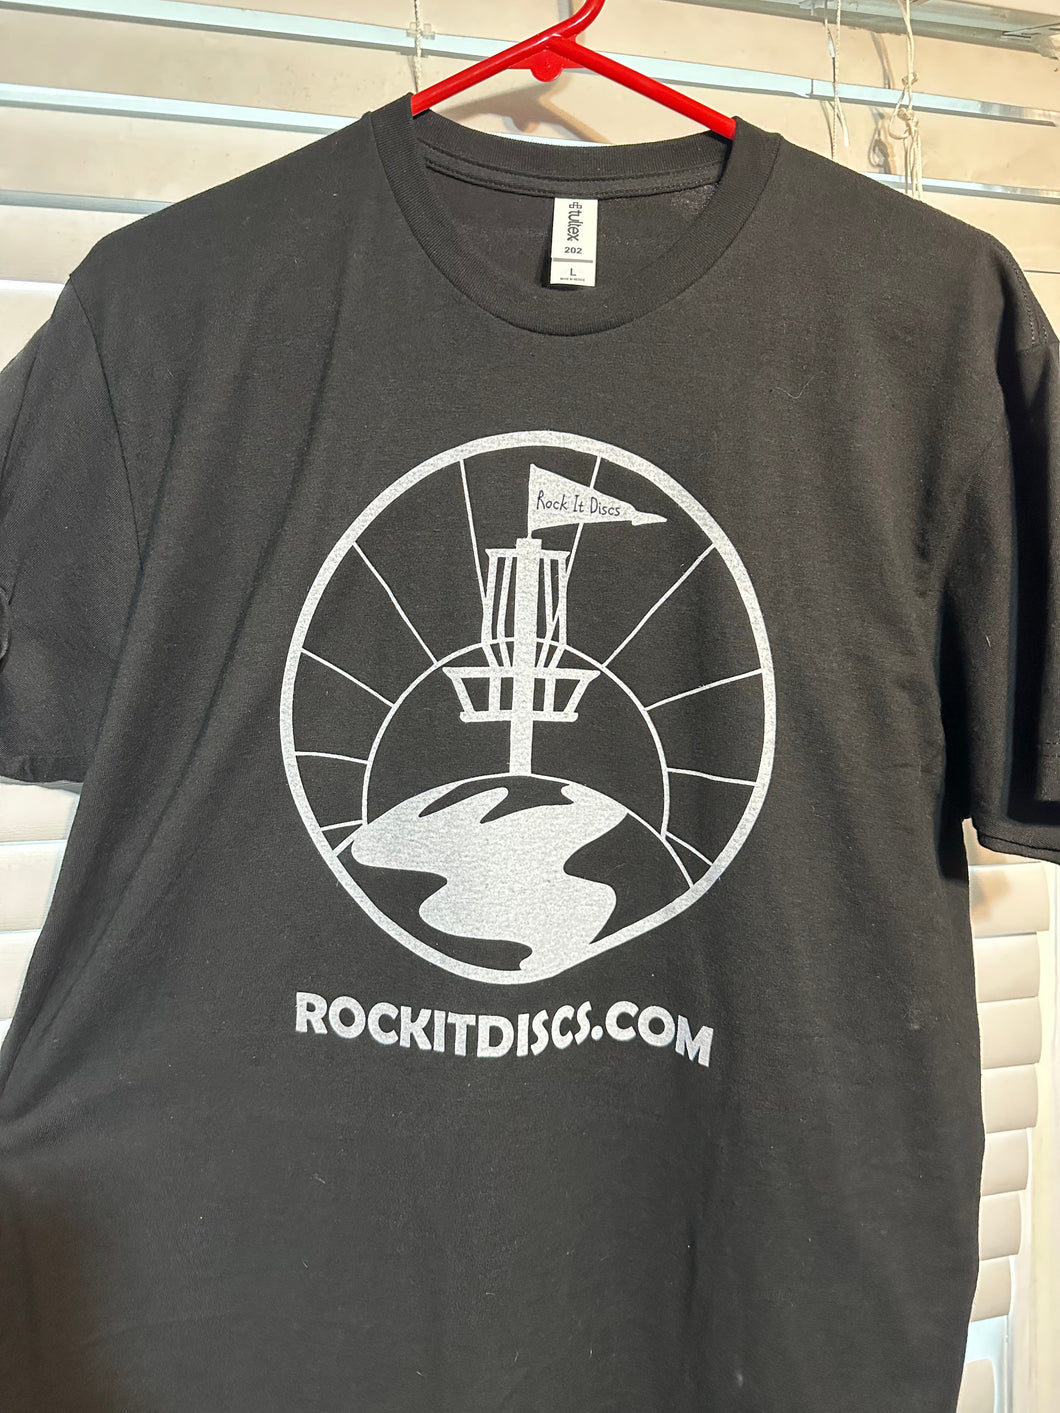 Black Rock It Discs T-shirt